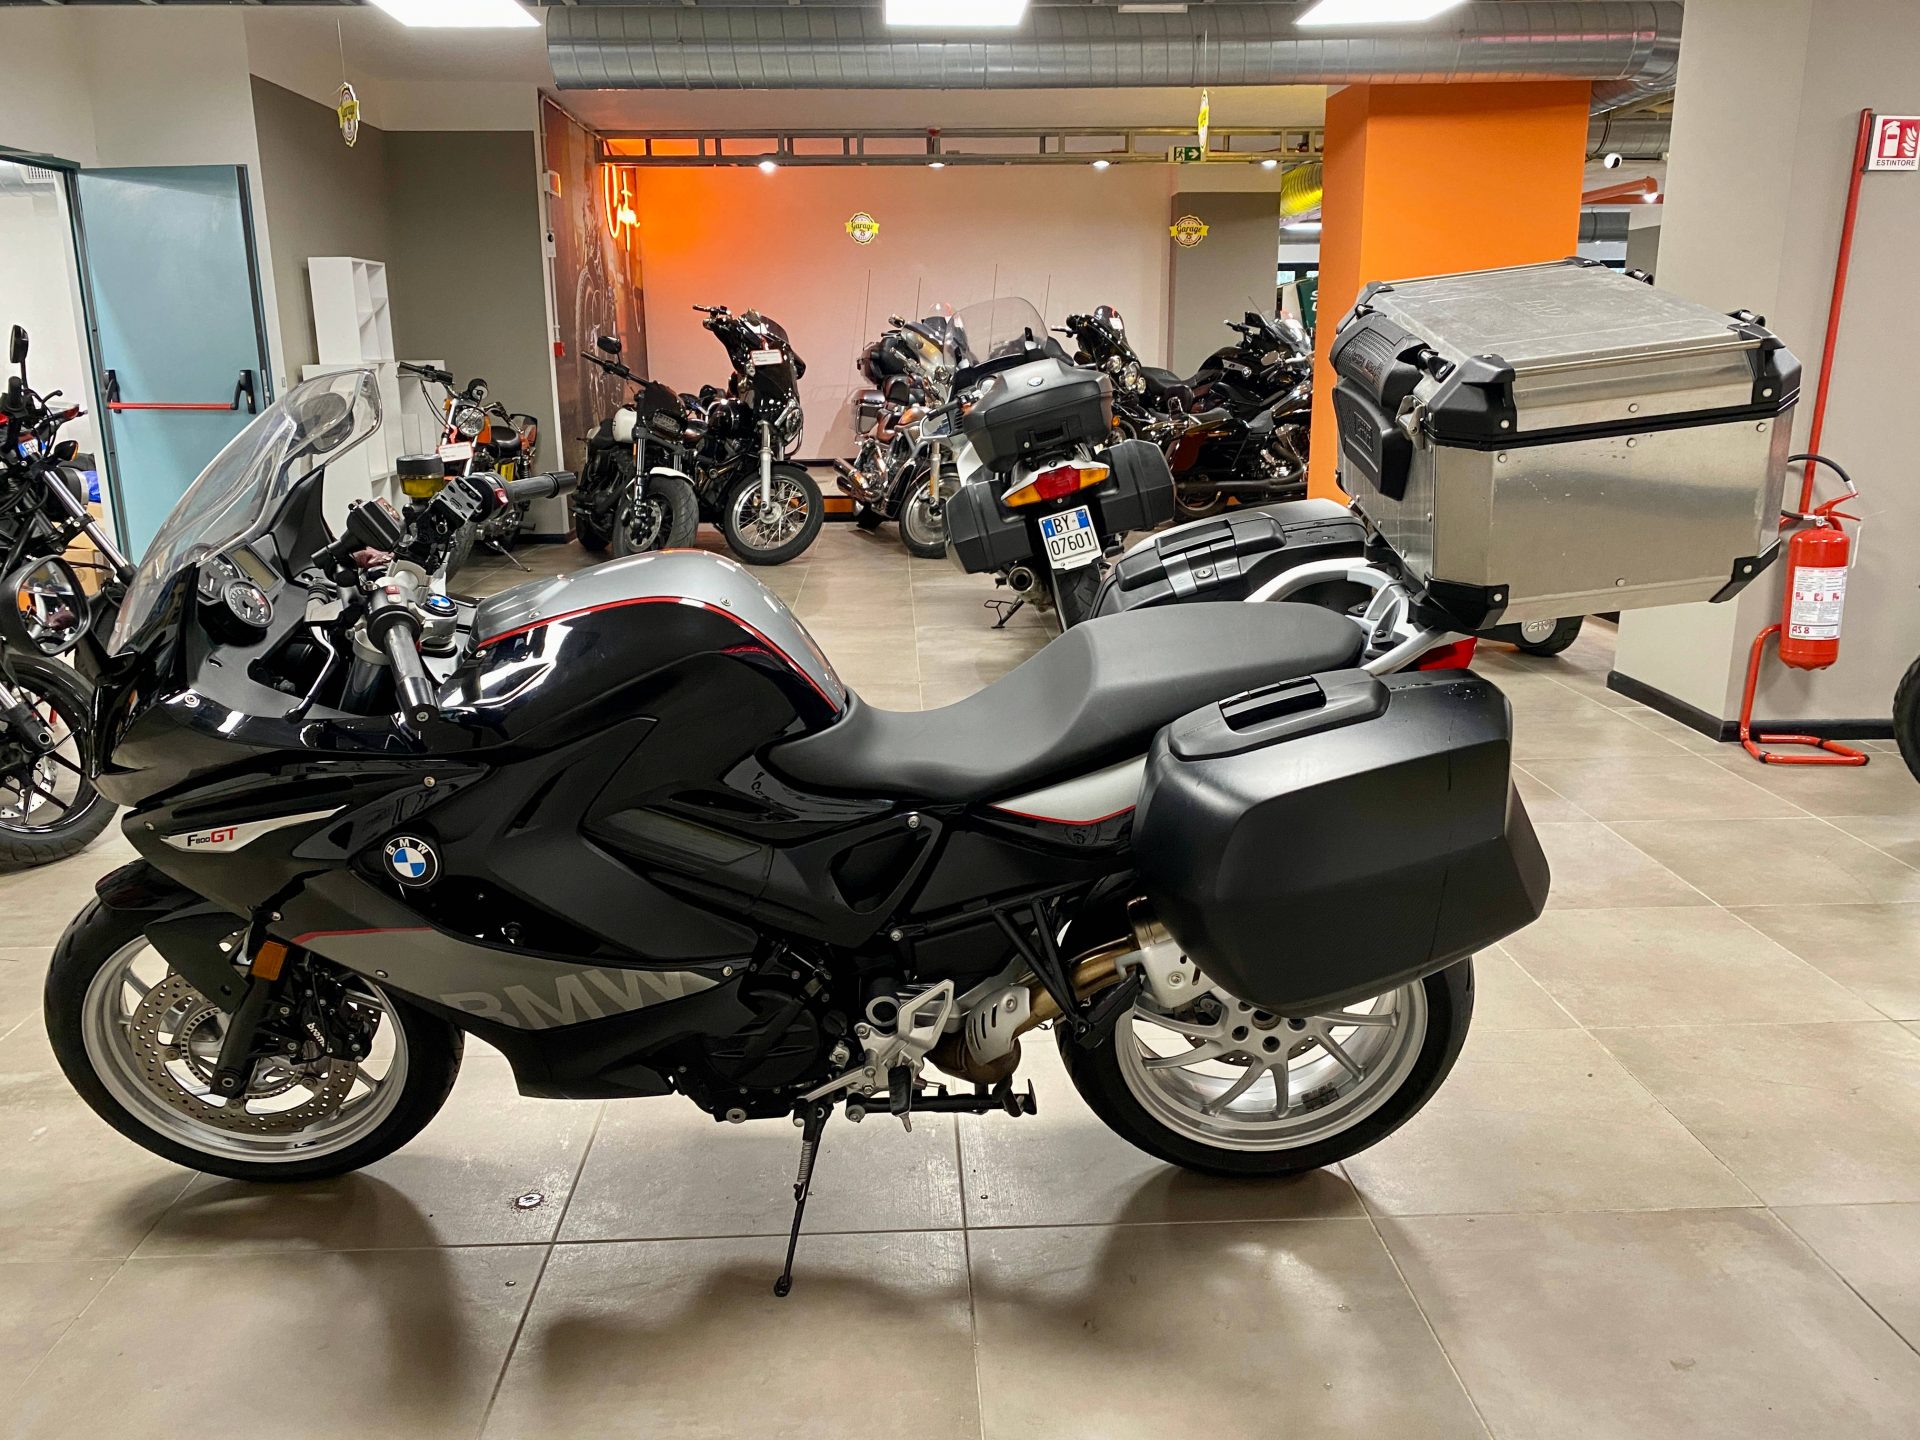 moto garage